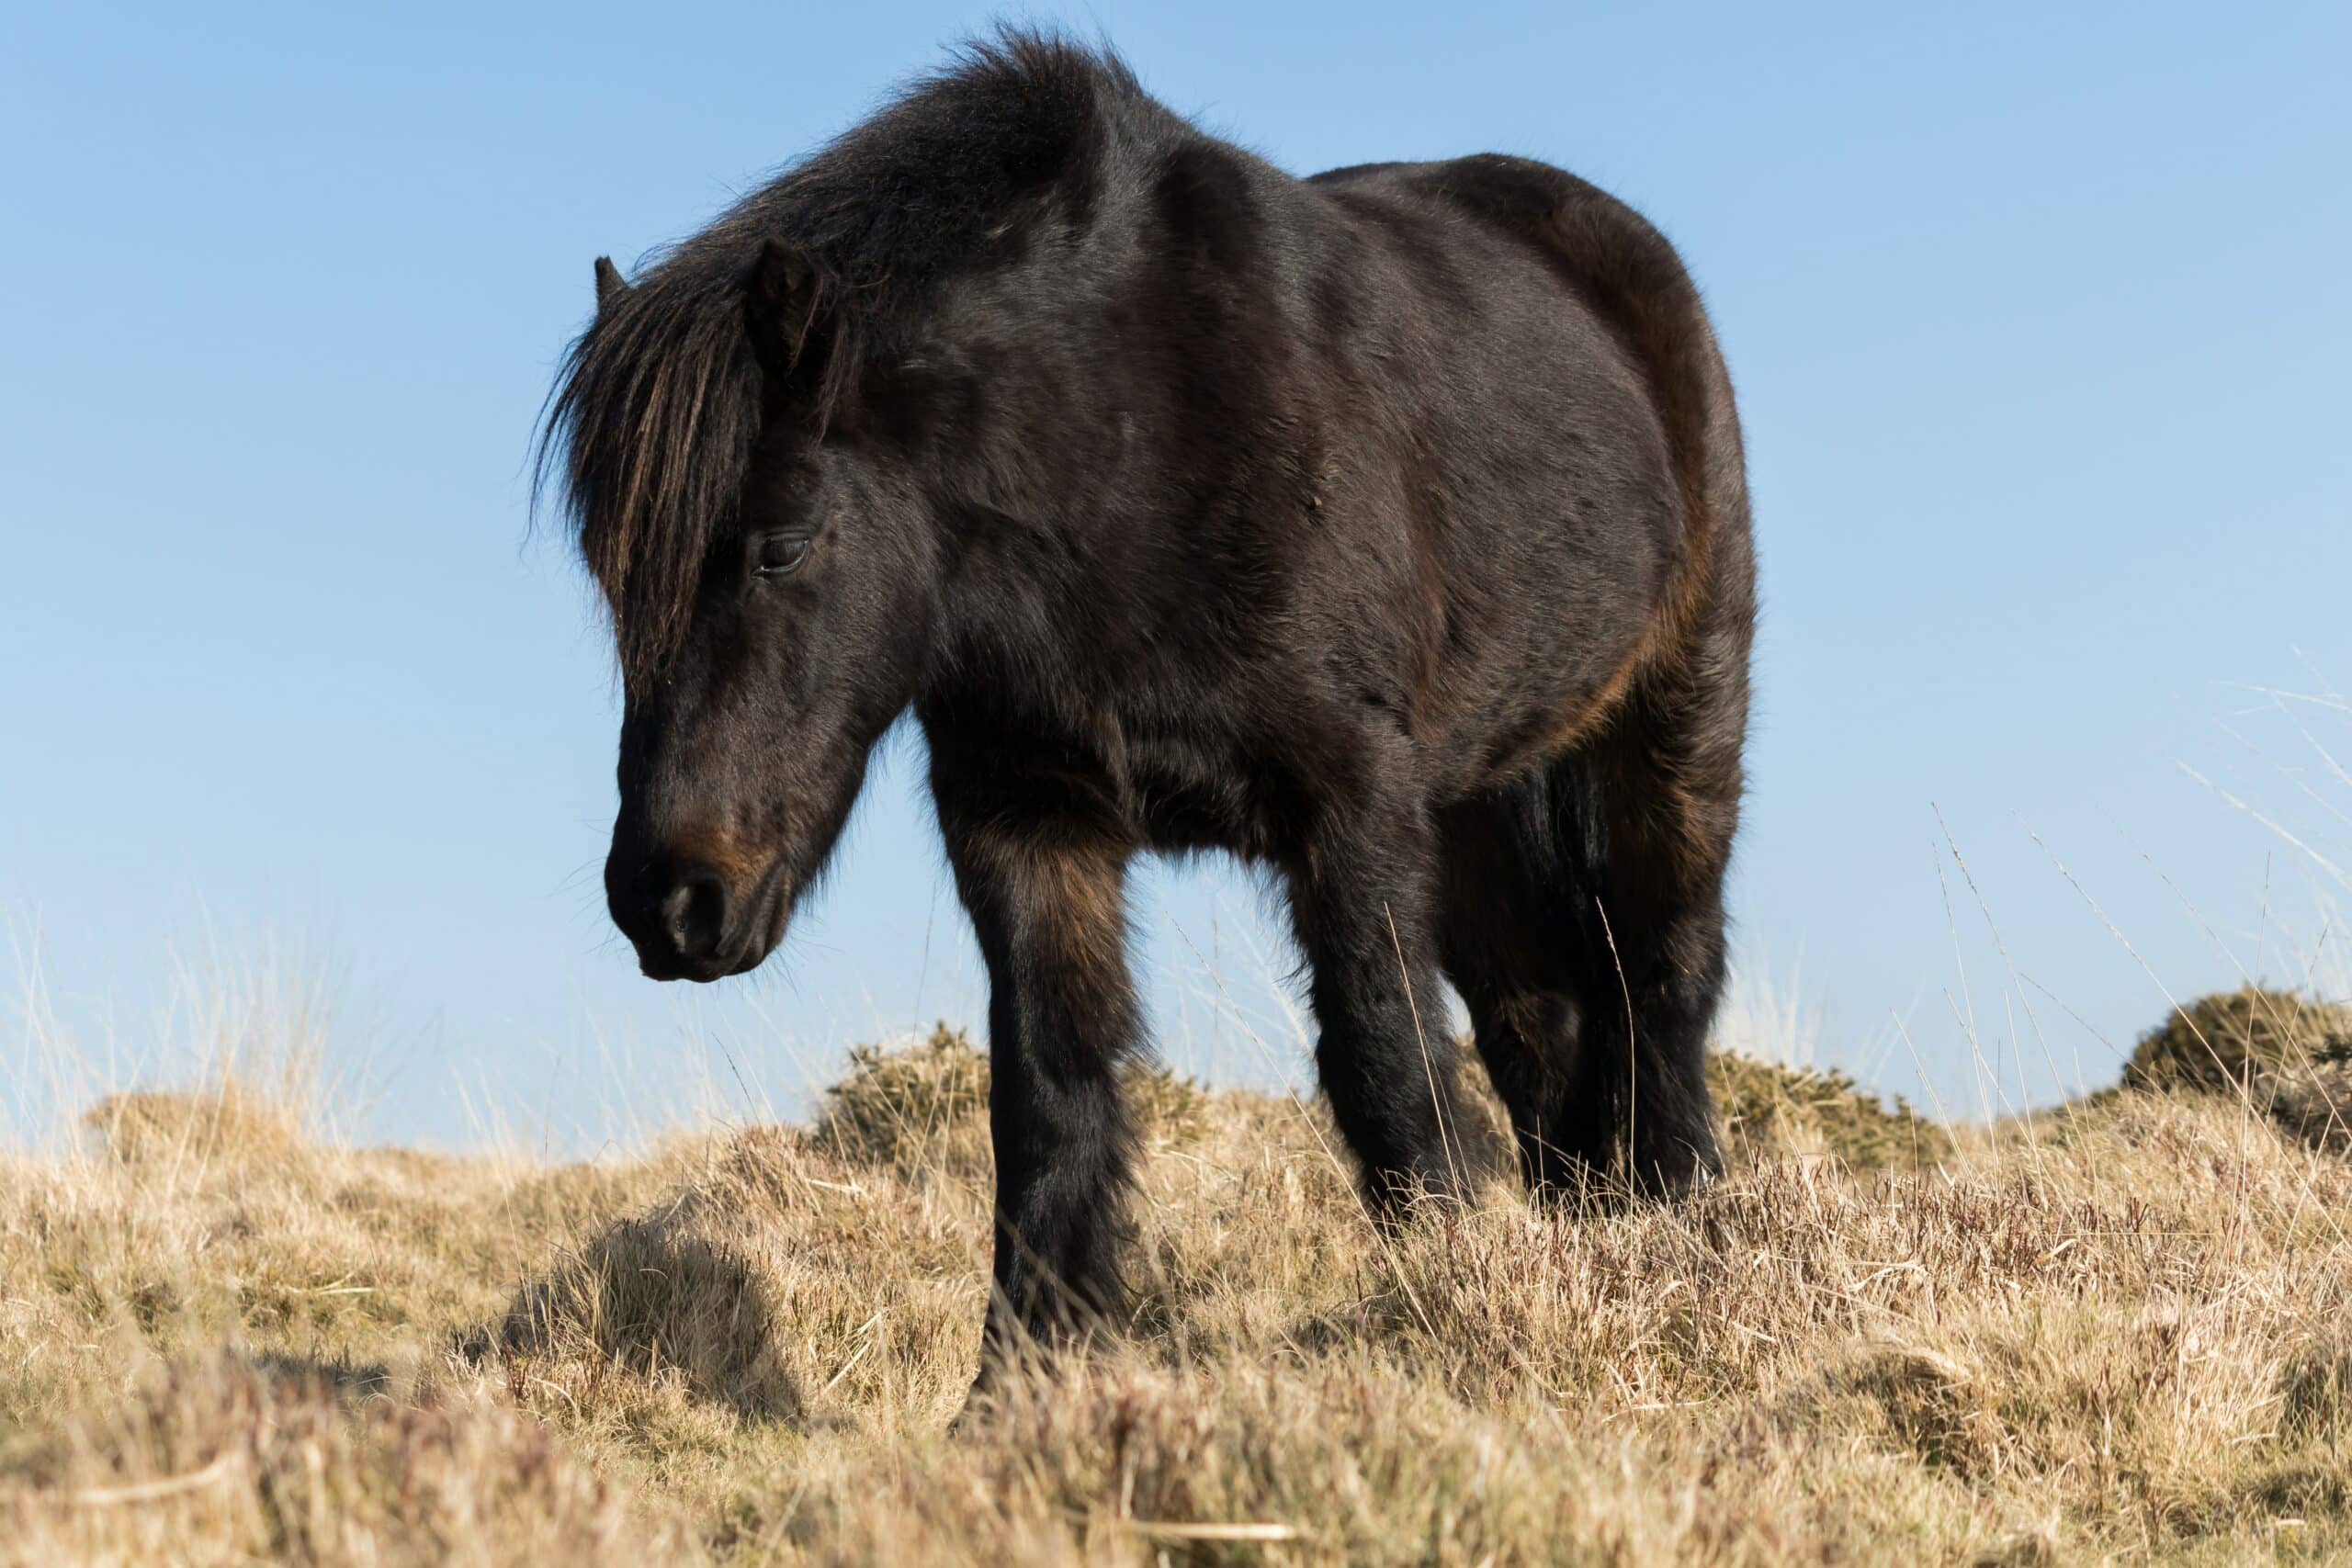 dartmoor pony